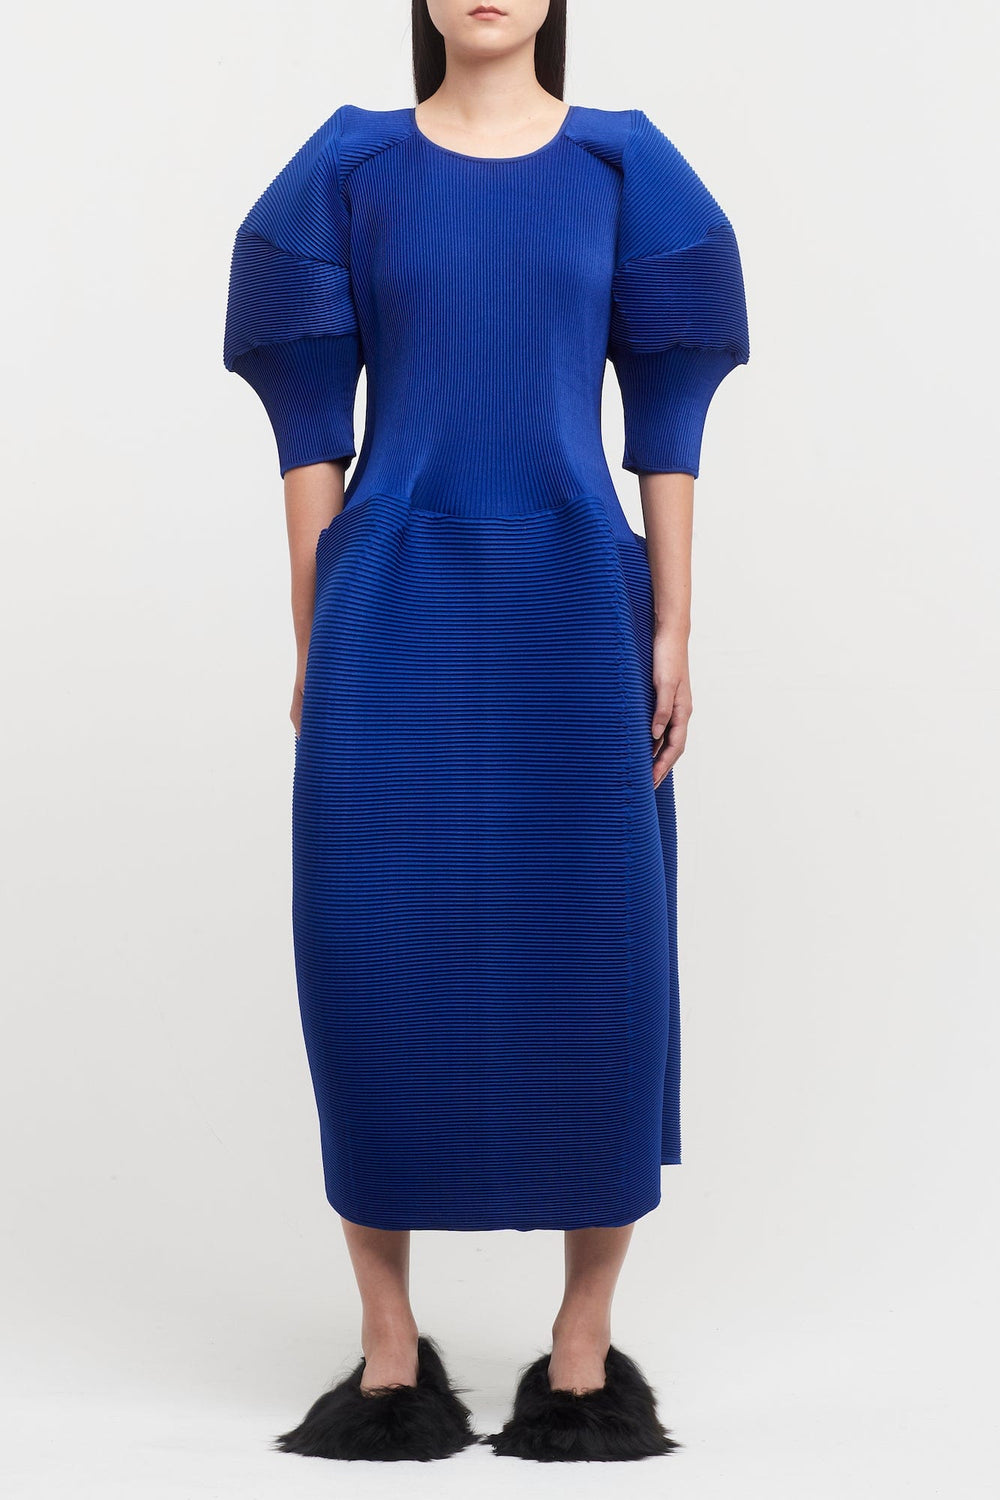 Blue – Ripple Antidote Sleeve Fashion Lifestyle Melitta and Baumeister Dress Big